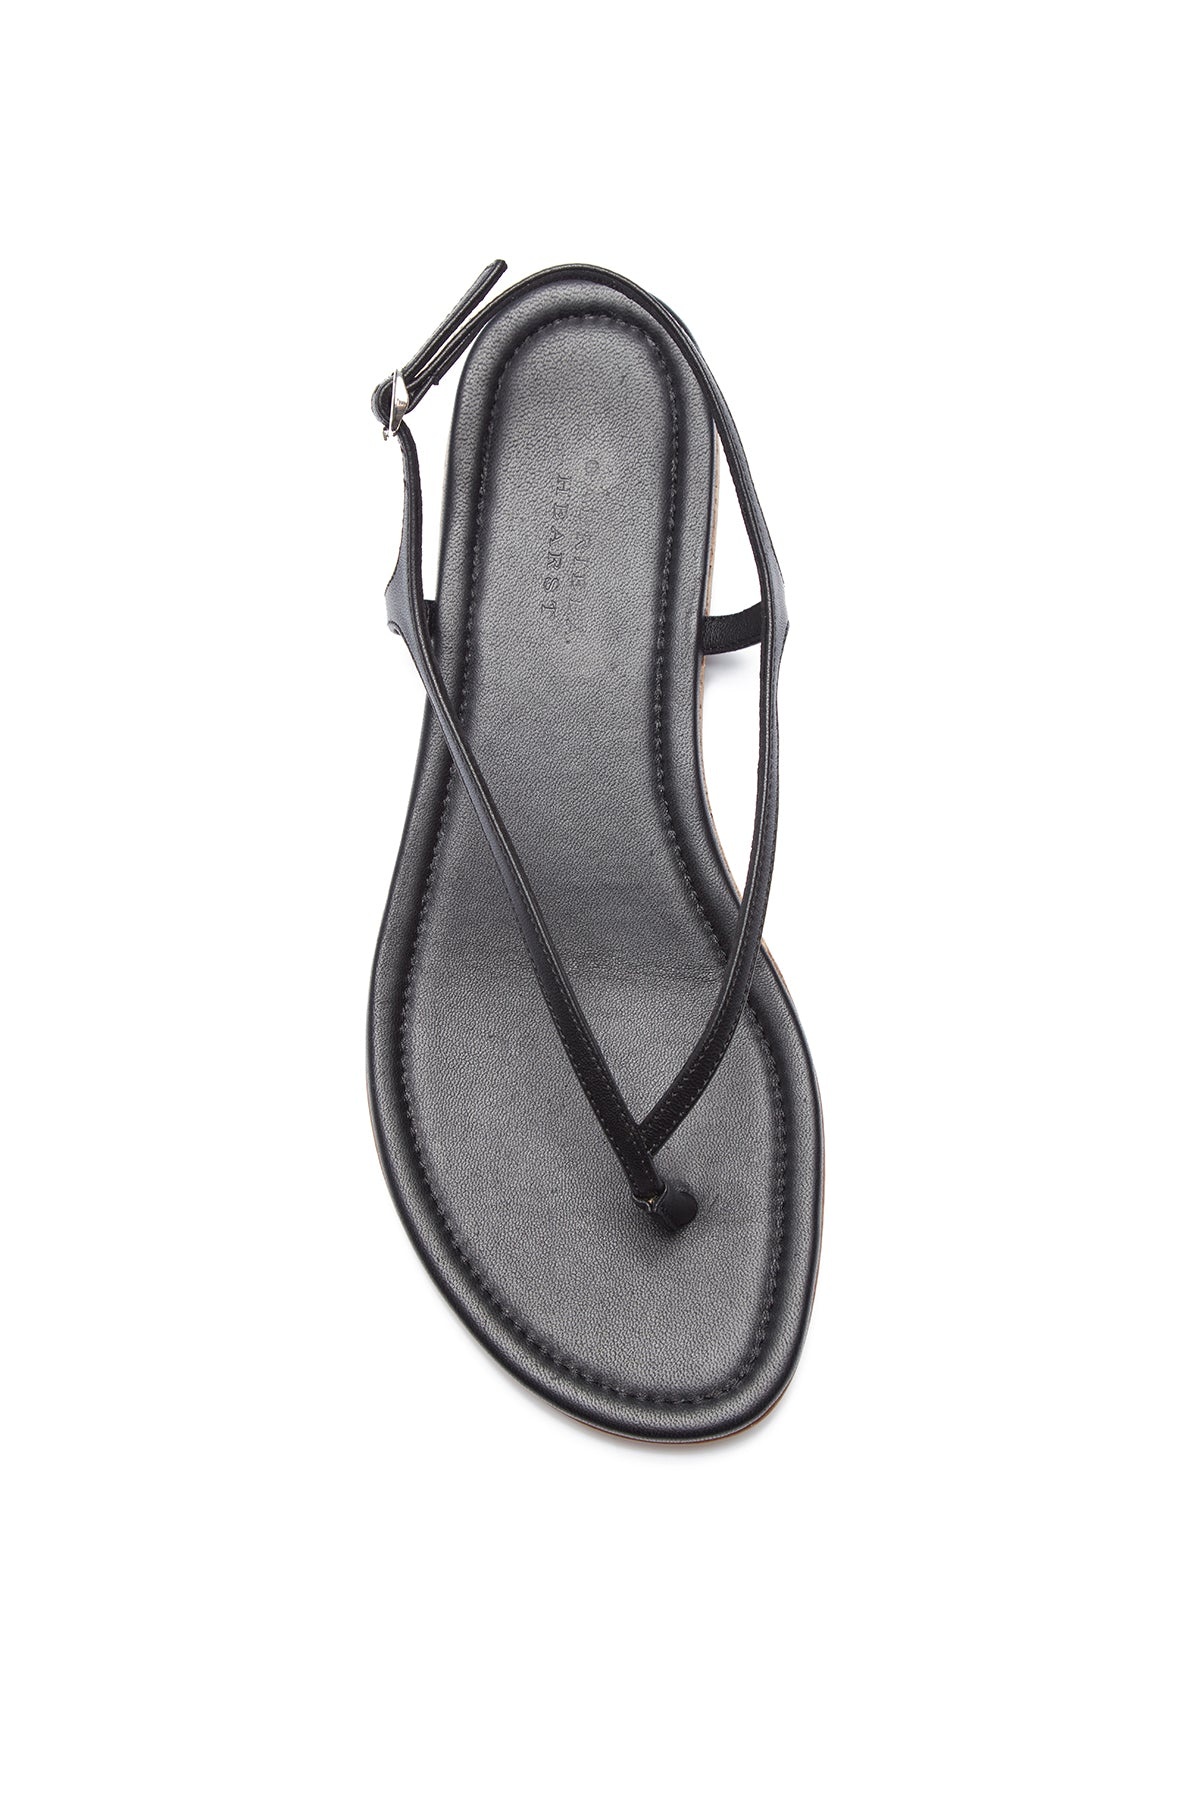 Gia Sandal in Black Leather - 4